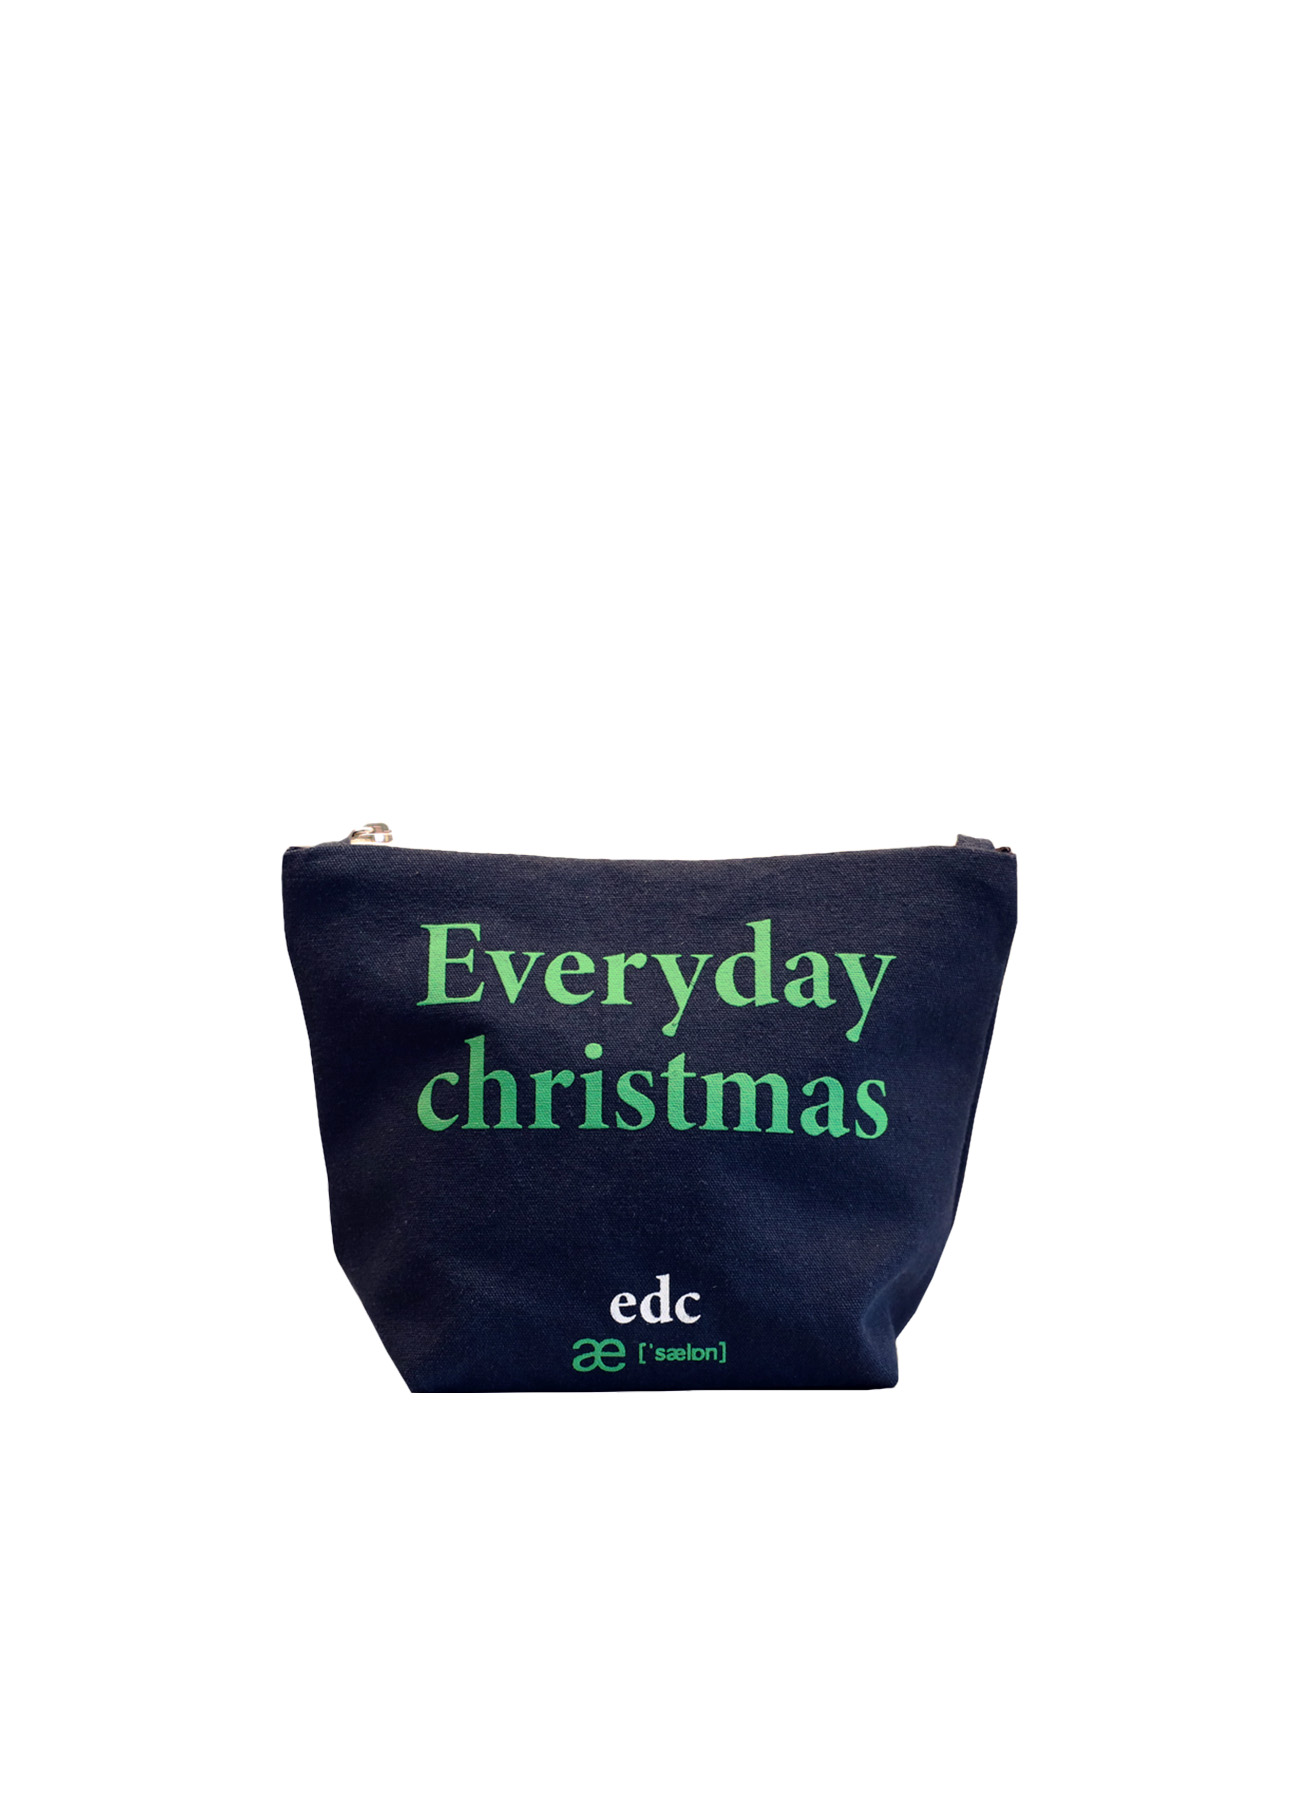 Edc - Everyday Christmas  Edc POUCH  NAVY